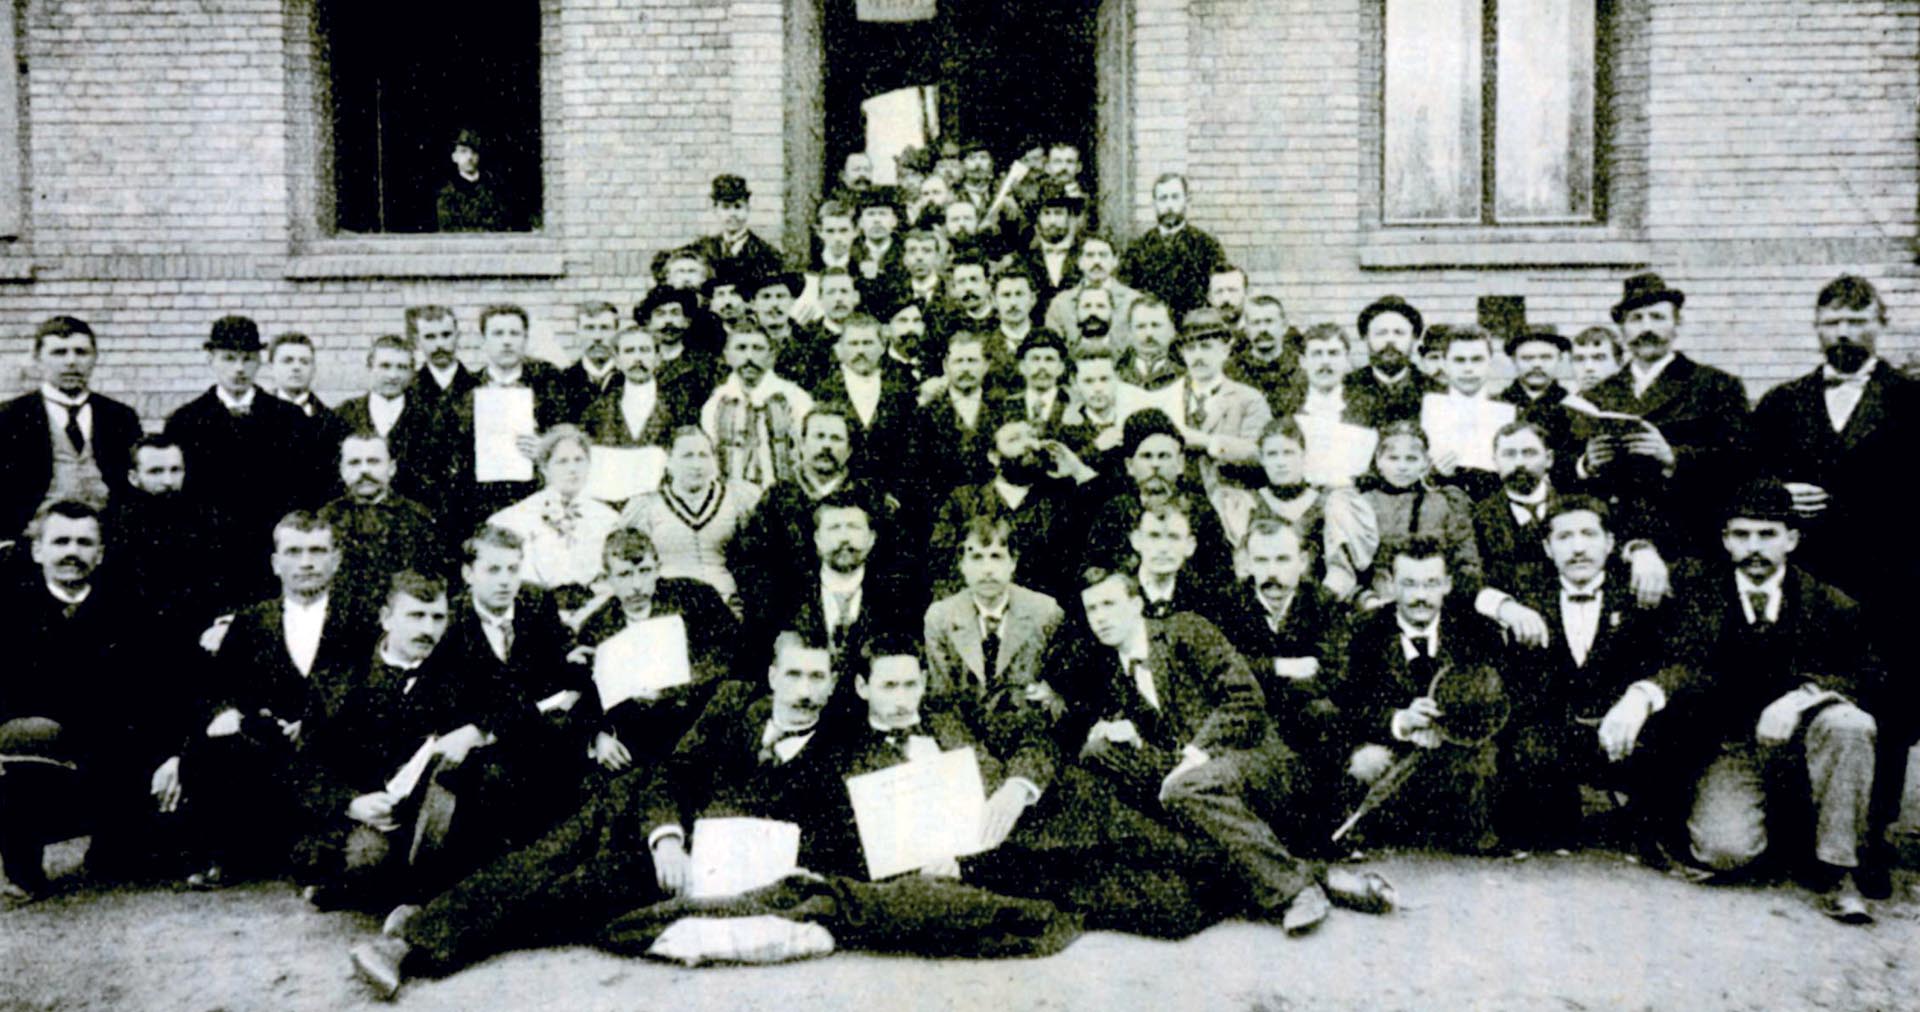 PRVA SOCIJALDEMOKRATSKA STRANKA OSNOVANA JE U ZAGREBU 1894. GODINE POD NAZIVOM SOCIJALDEMOKRATSKA STRANKA HRVATSKE I SLAVONIJE (SDSHS) | Foto: IZLOŽBA ‘120 GODINA HRVATSKE SOCIJALDEMOKRACIJE’